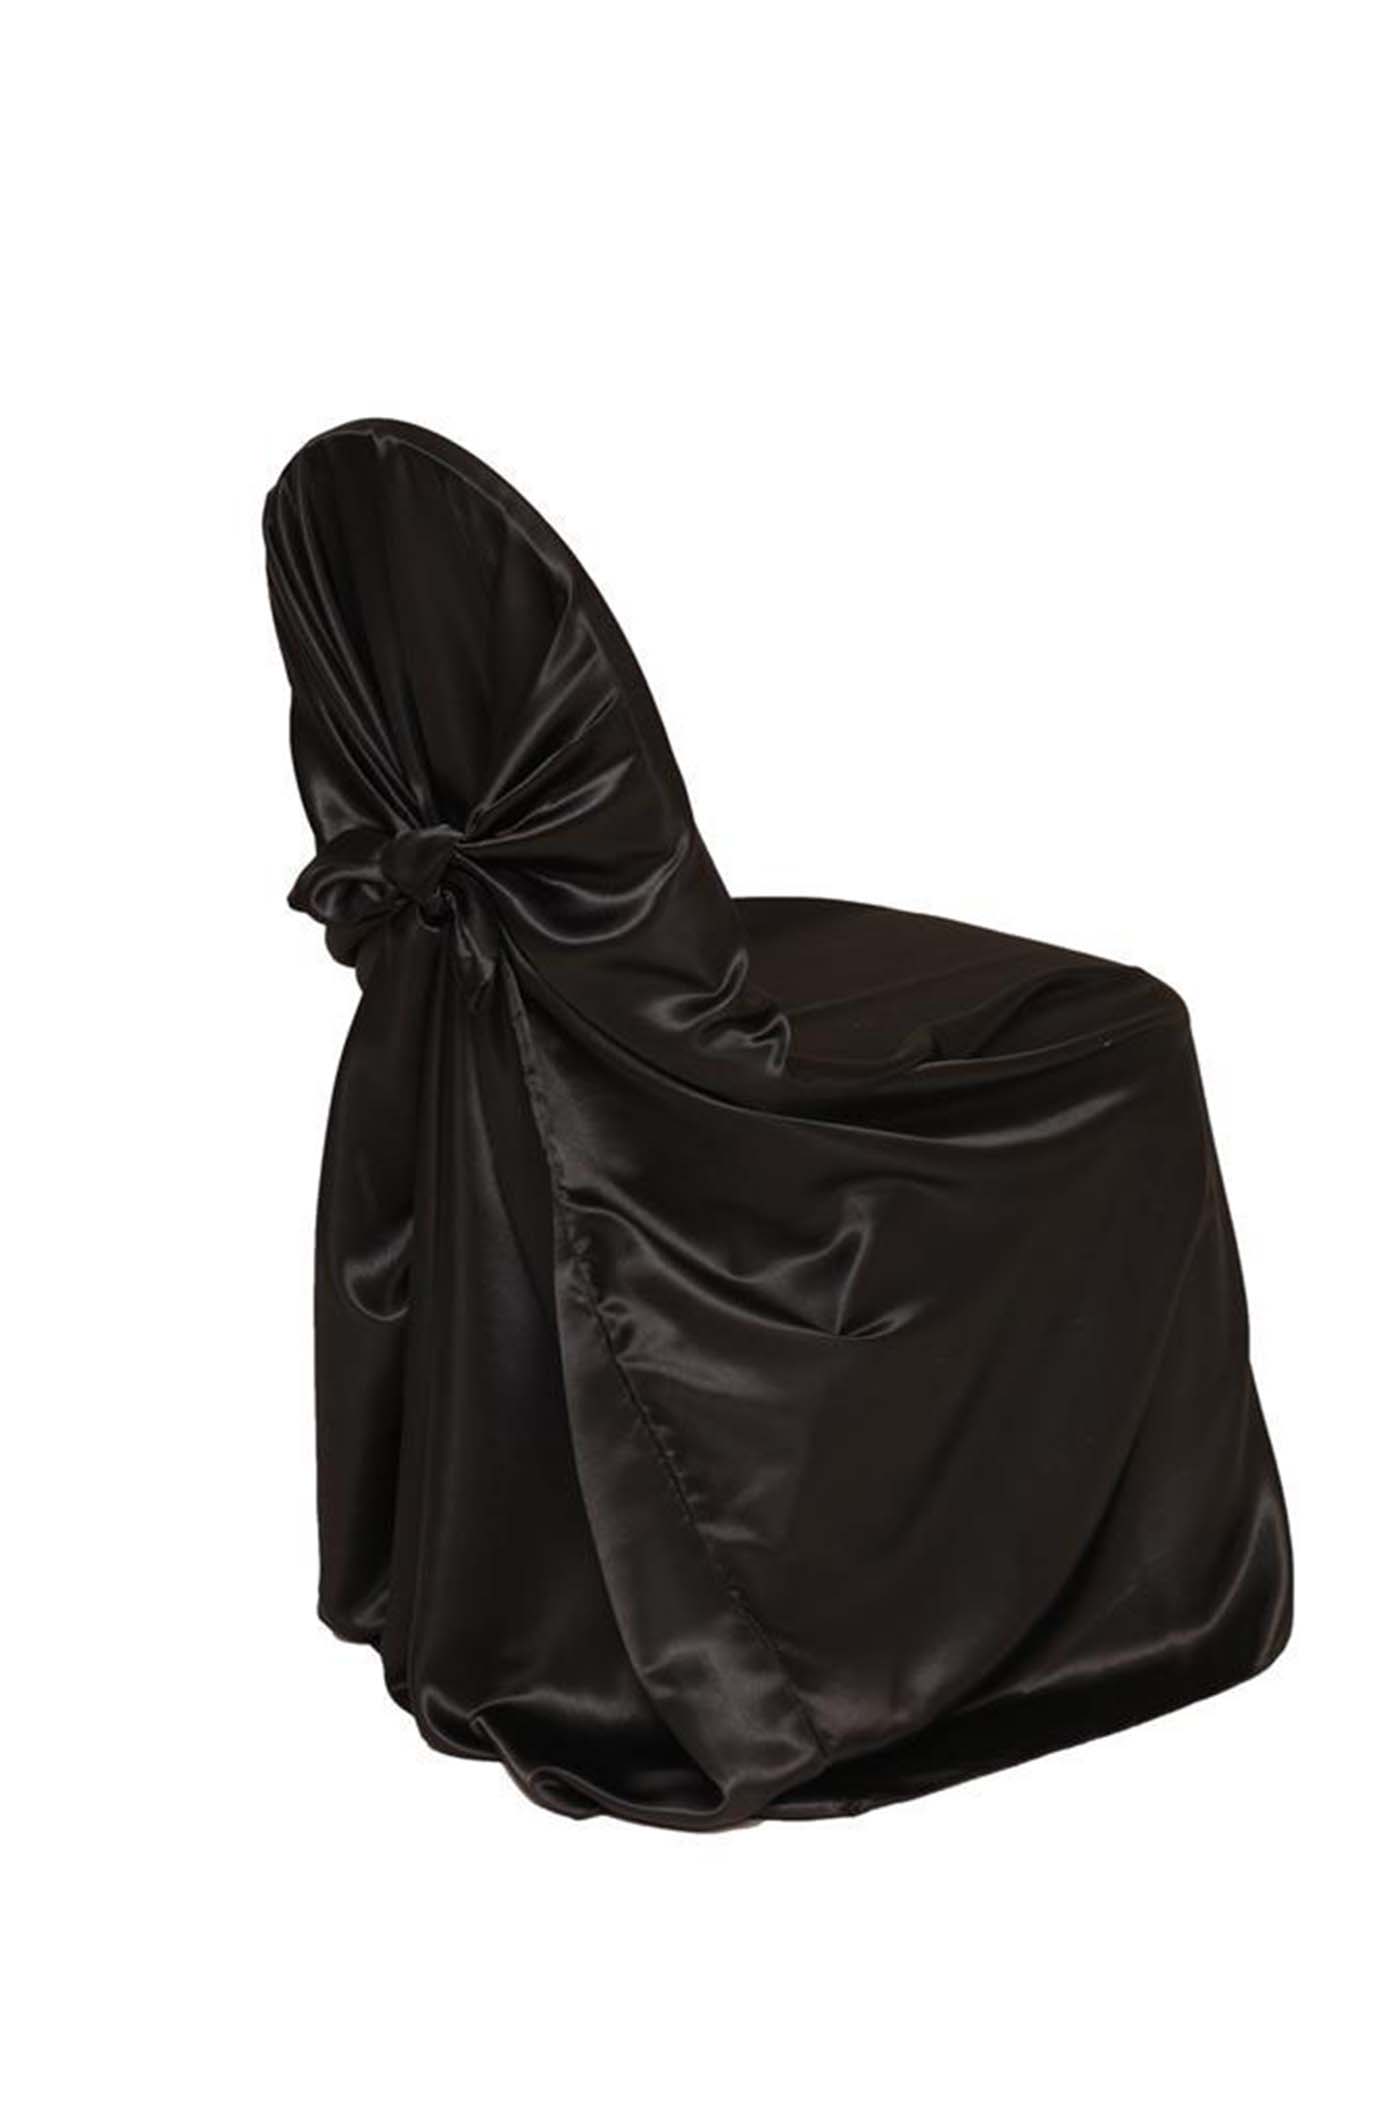 Black Satin Universal Chair Cover